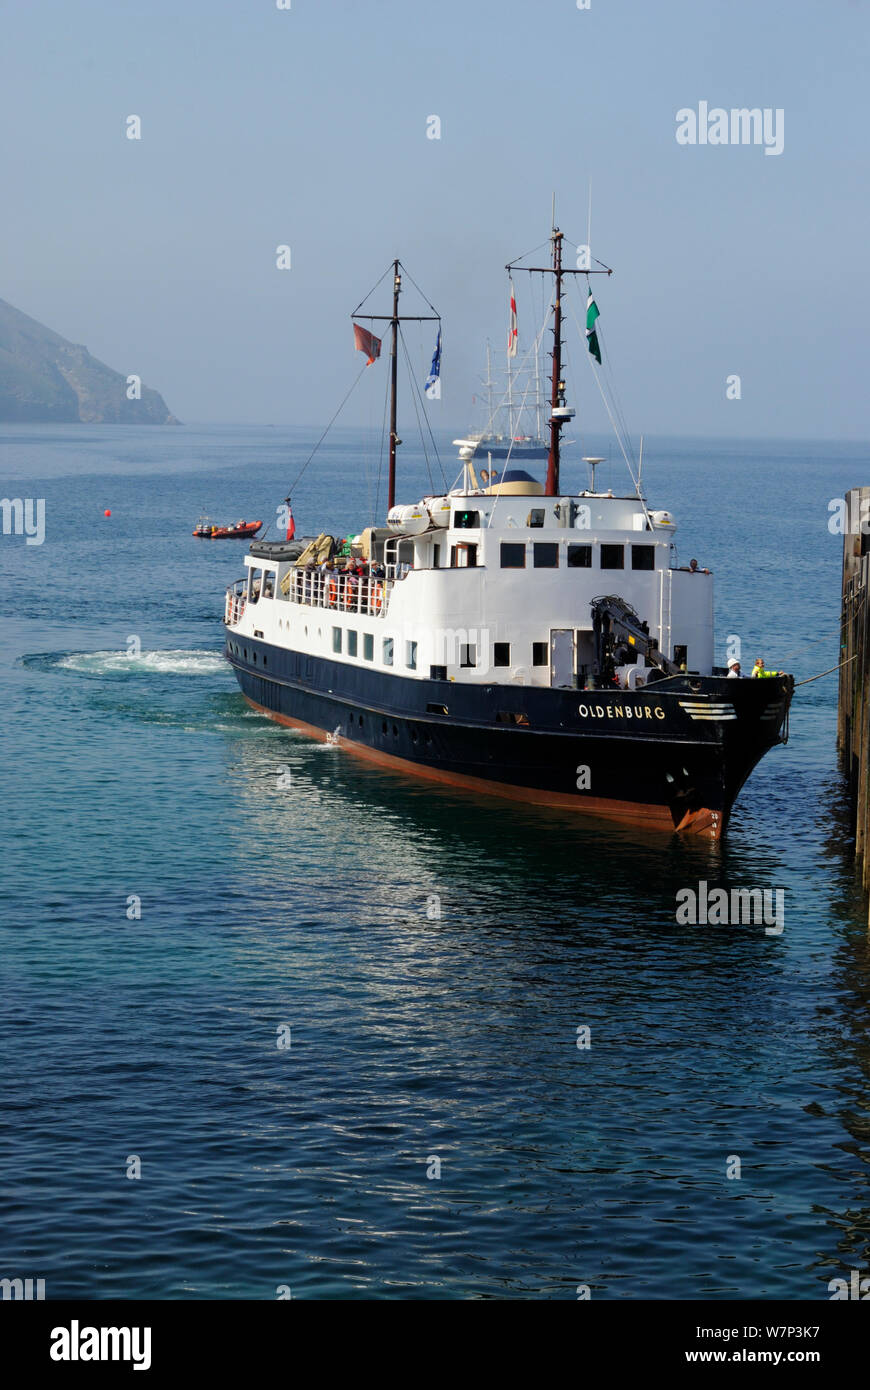 10X15 Passenger Vessel OLDENBURG Taken From Lundy 6X4 Ship Photo Photograph 